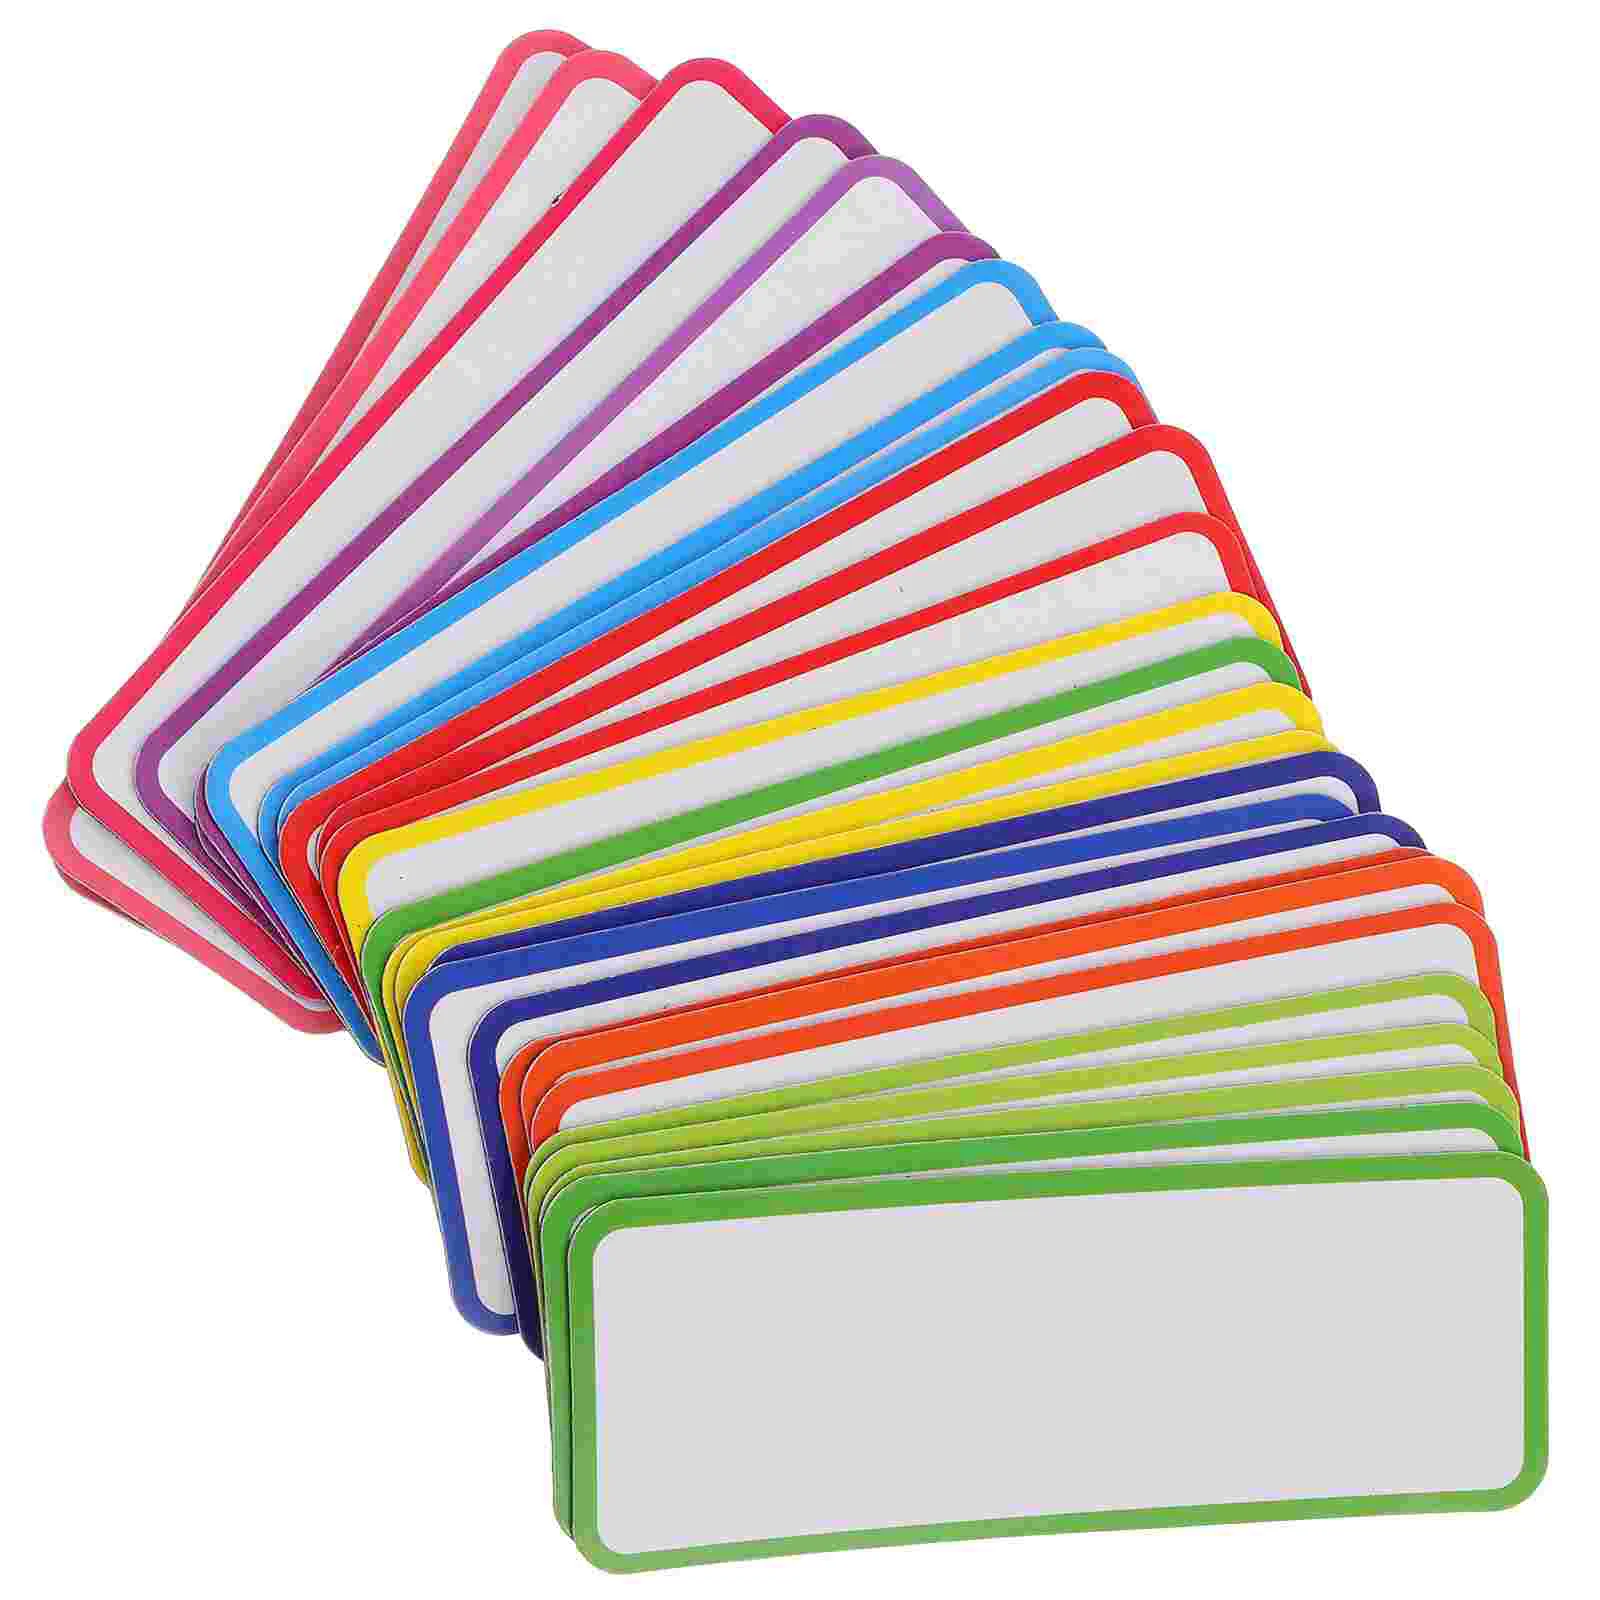 

27pcs Handwritten Fridge Stickers Dry Erase Magnetic Memo Labels Reusable Memo Tags Erasable white board